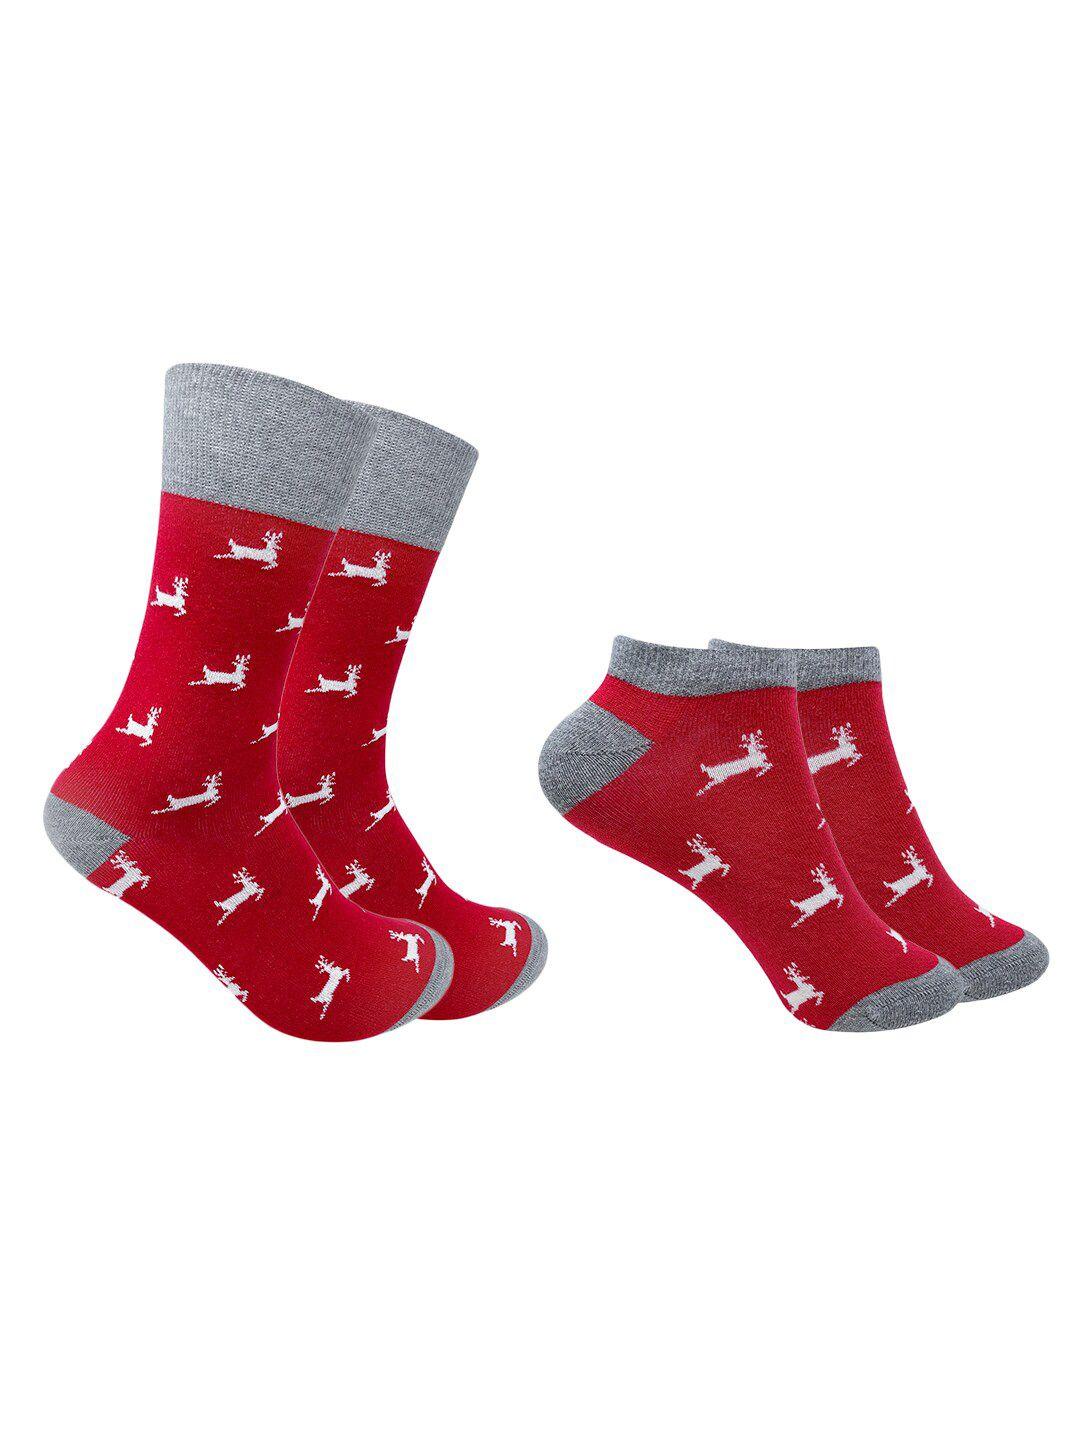 mint & oak pack of 2 red patterned socks